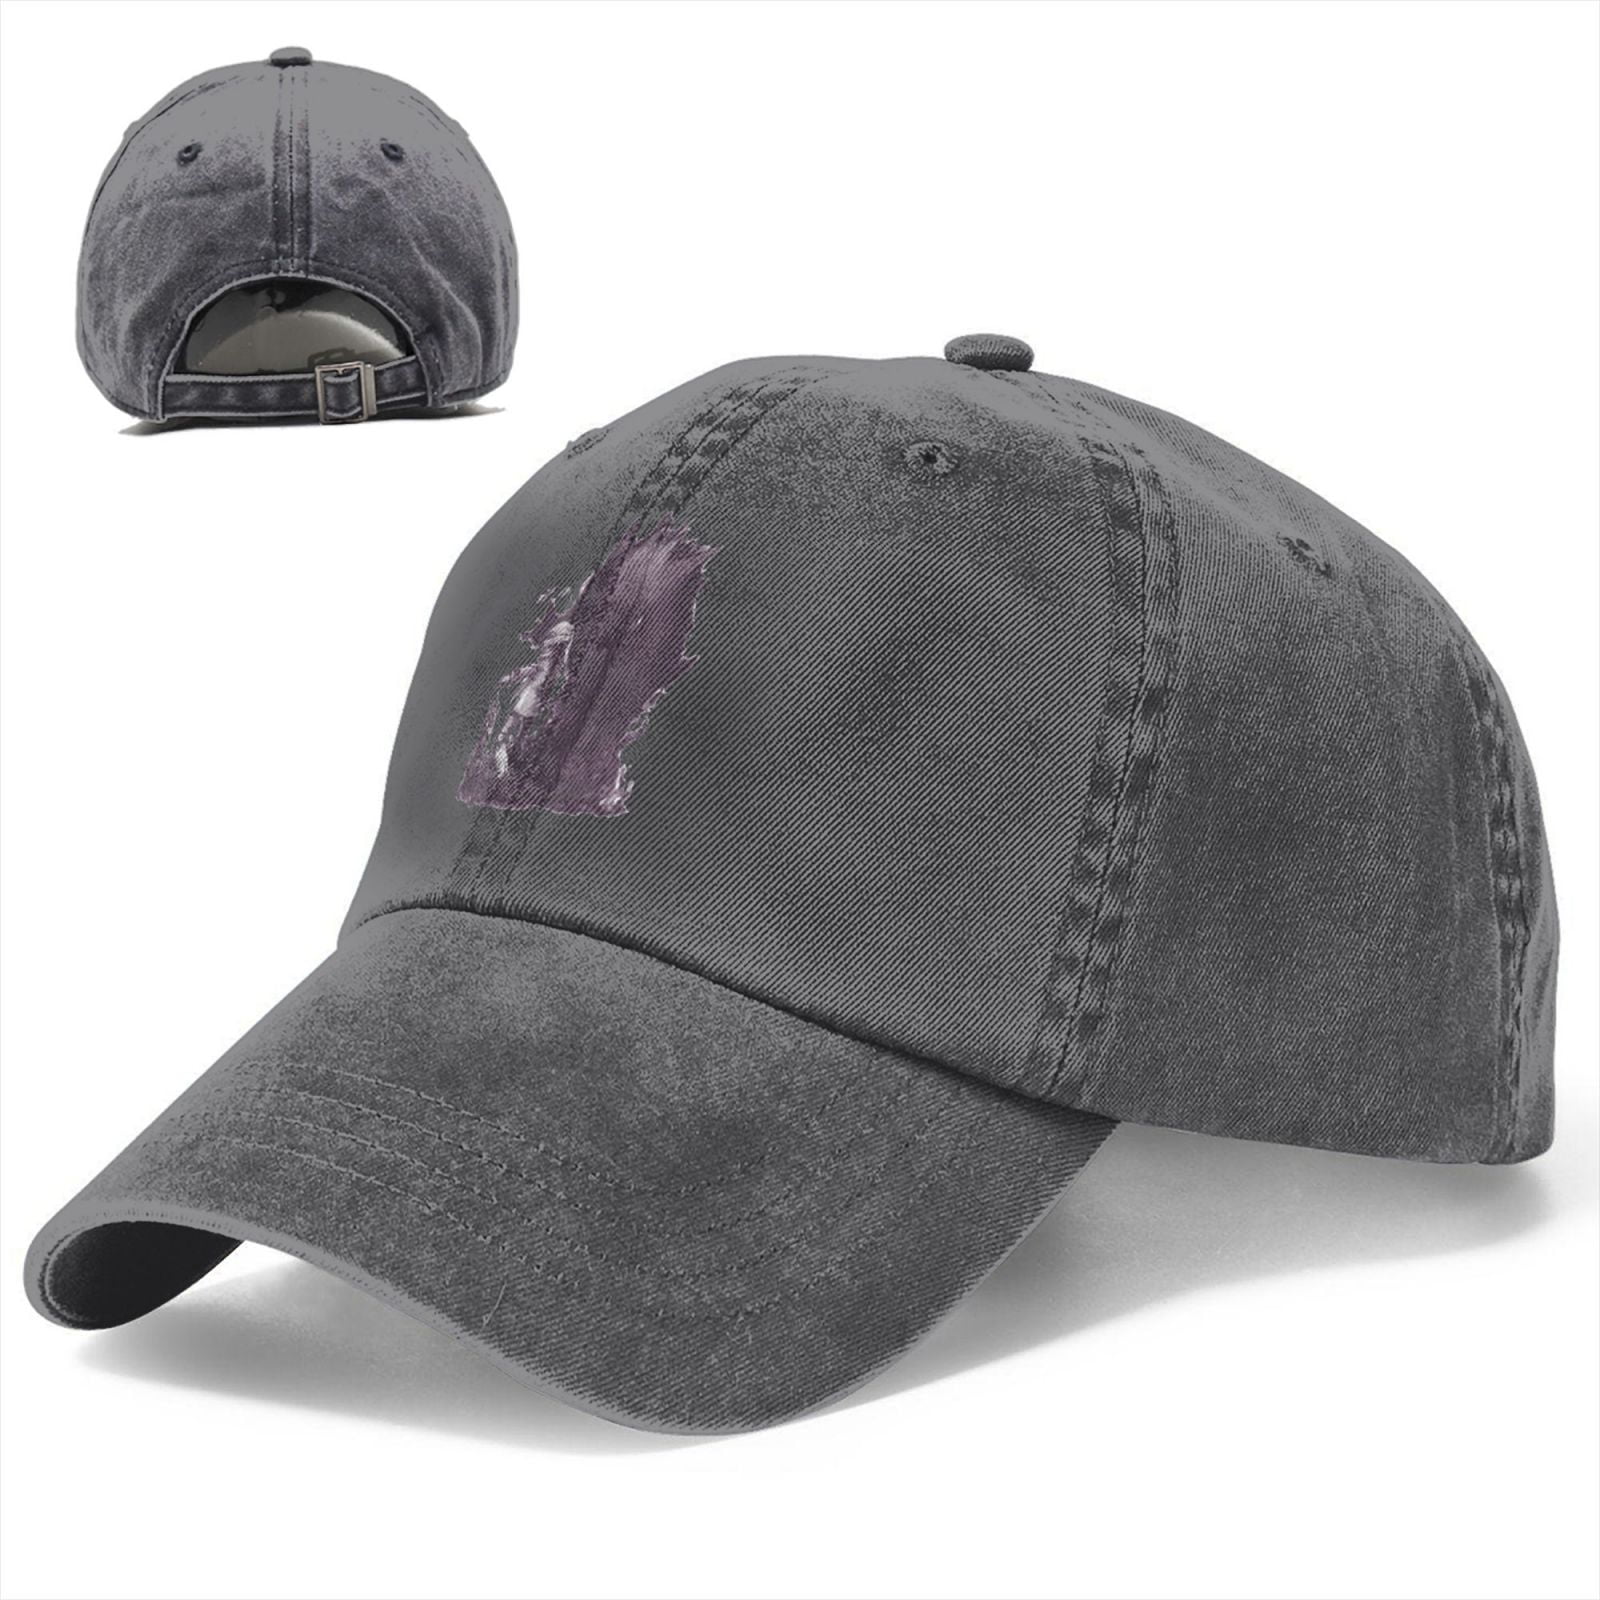 Gen_Gar Trucker Cap Light Weight Vintage Snapback Hat Golf Dad Hat ...